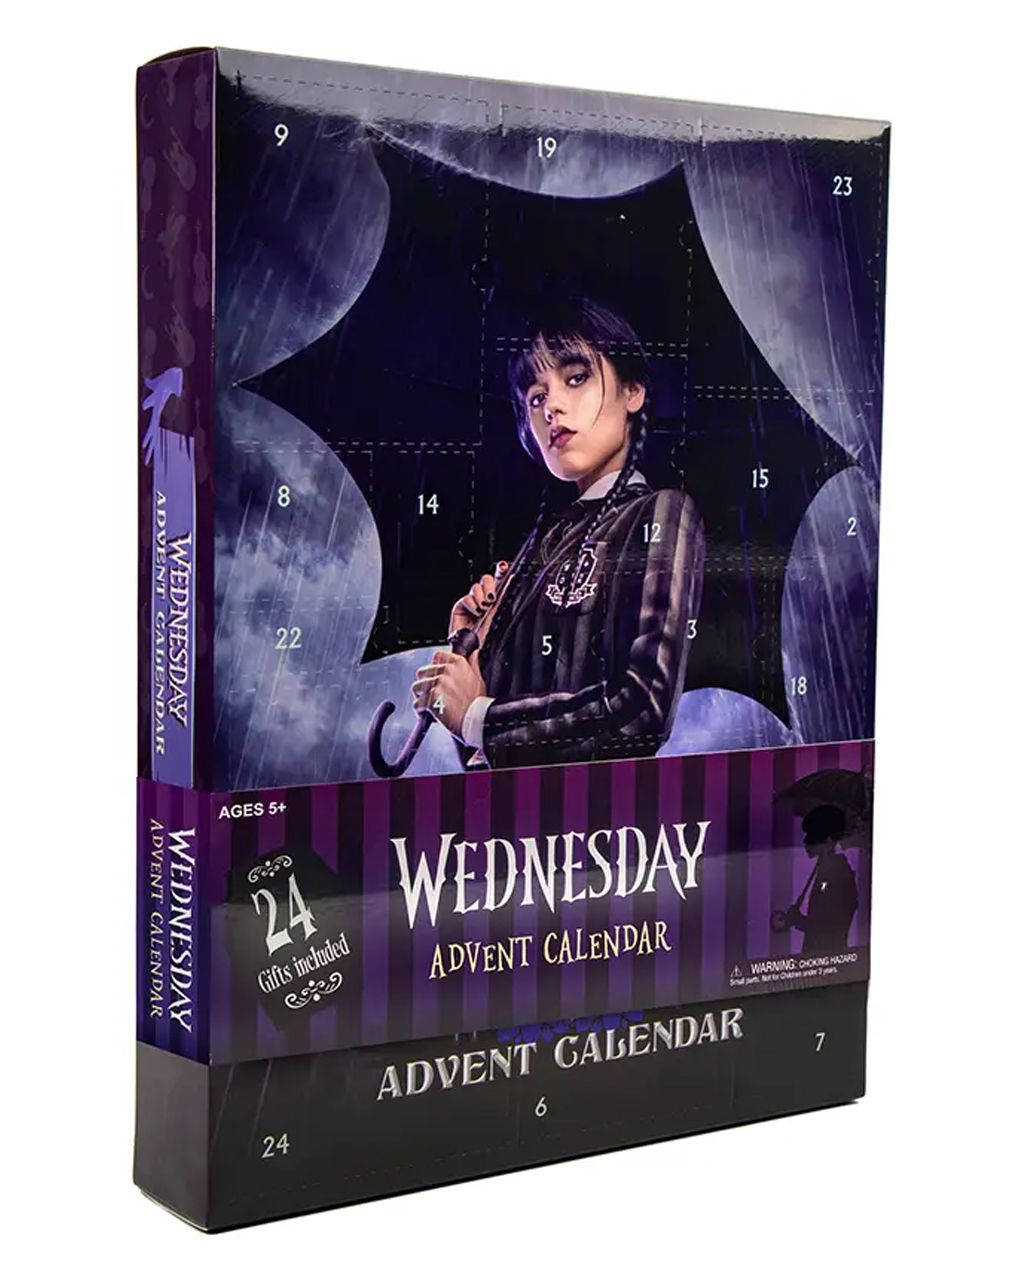 Wednesday Advent Calendar as a gift